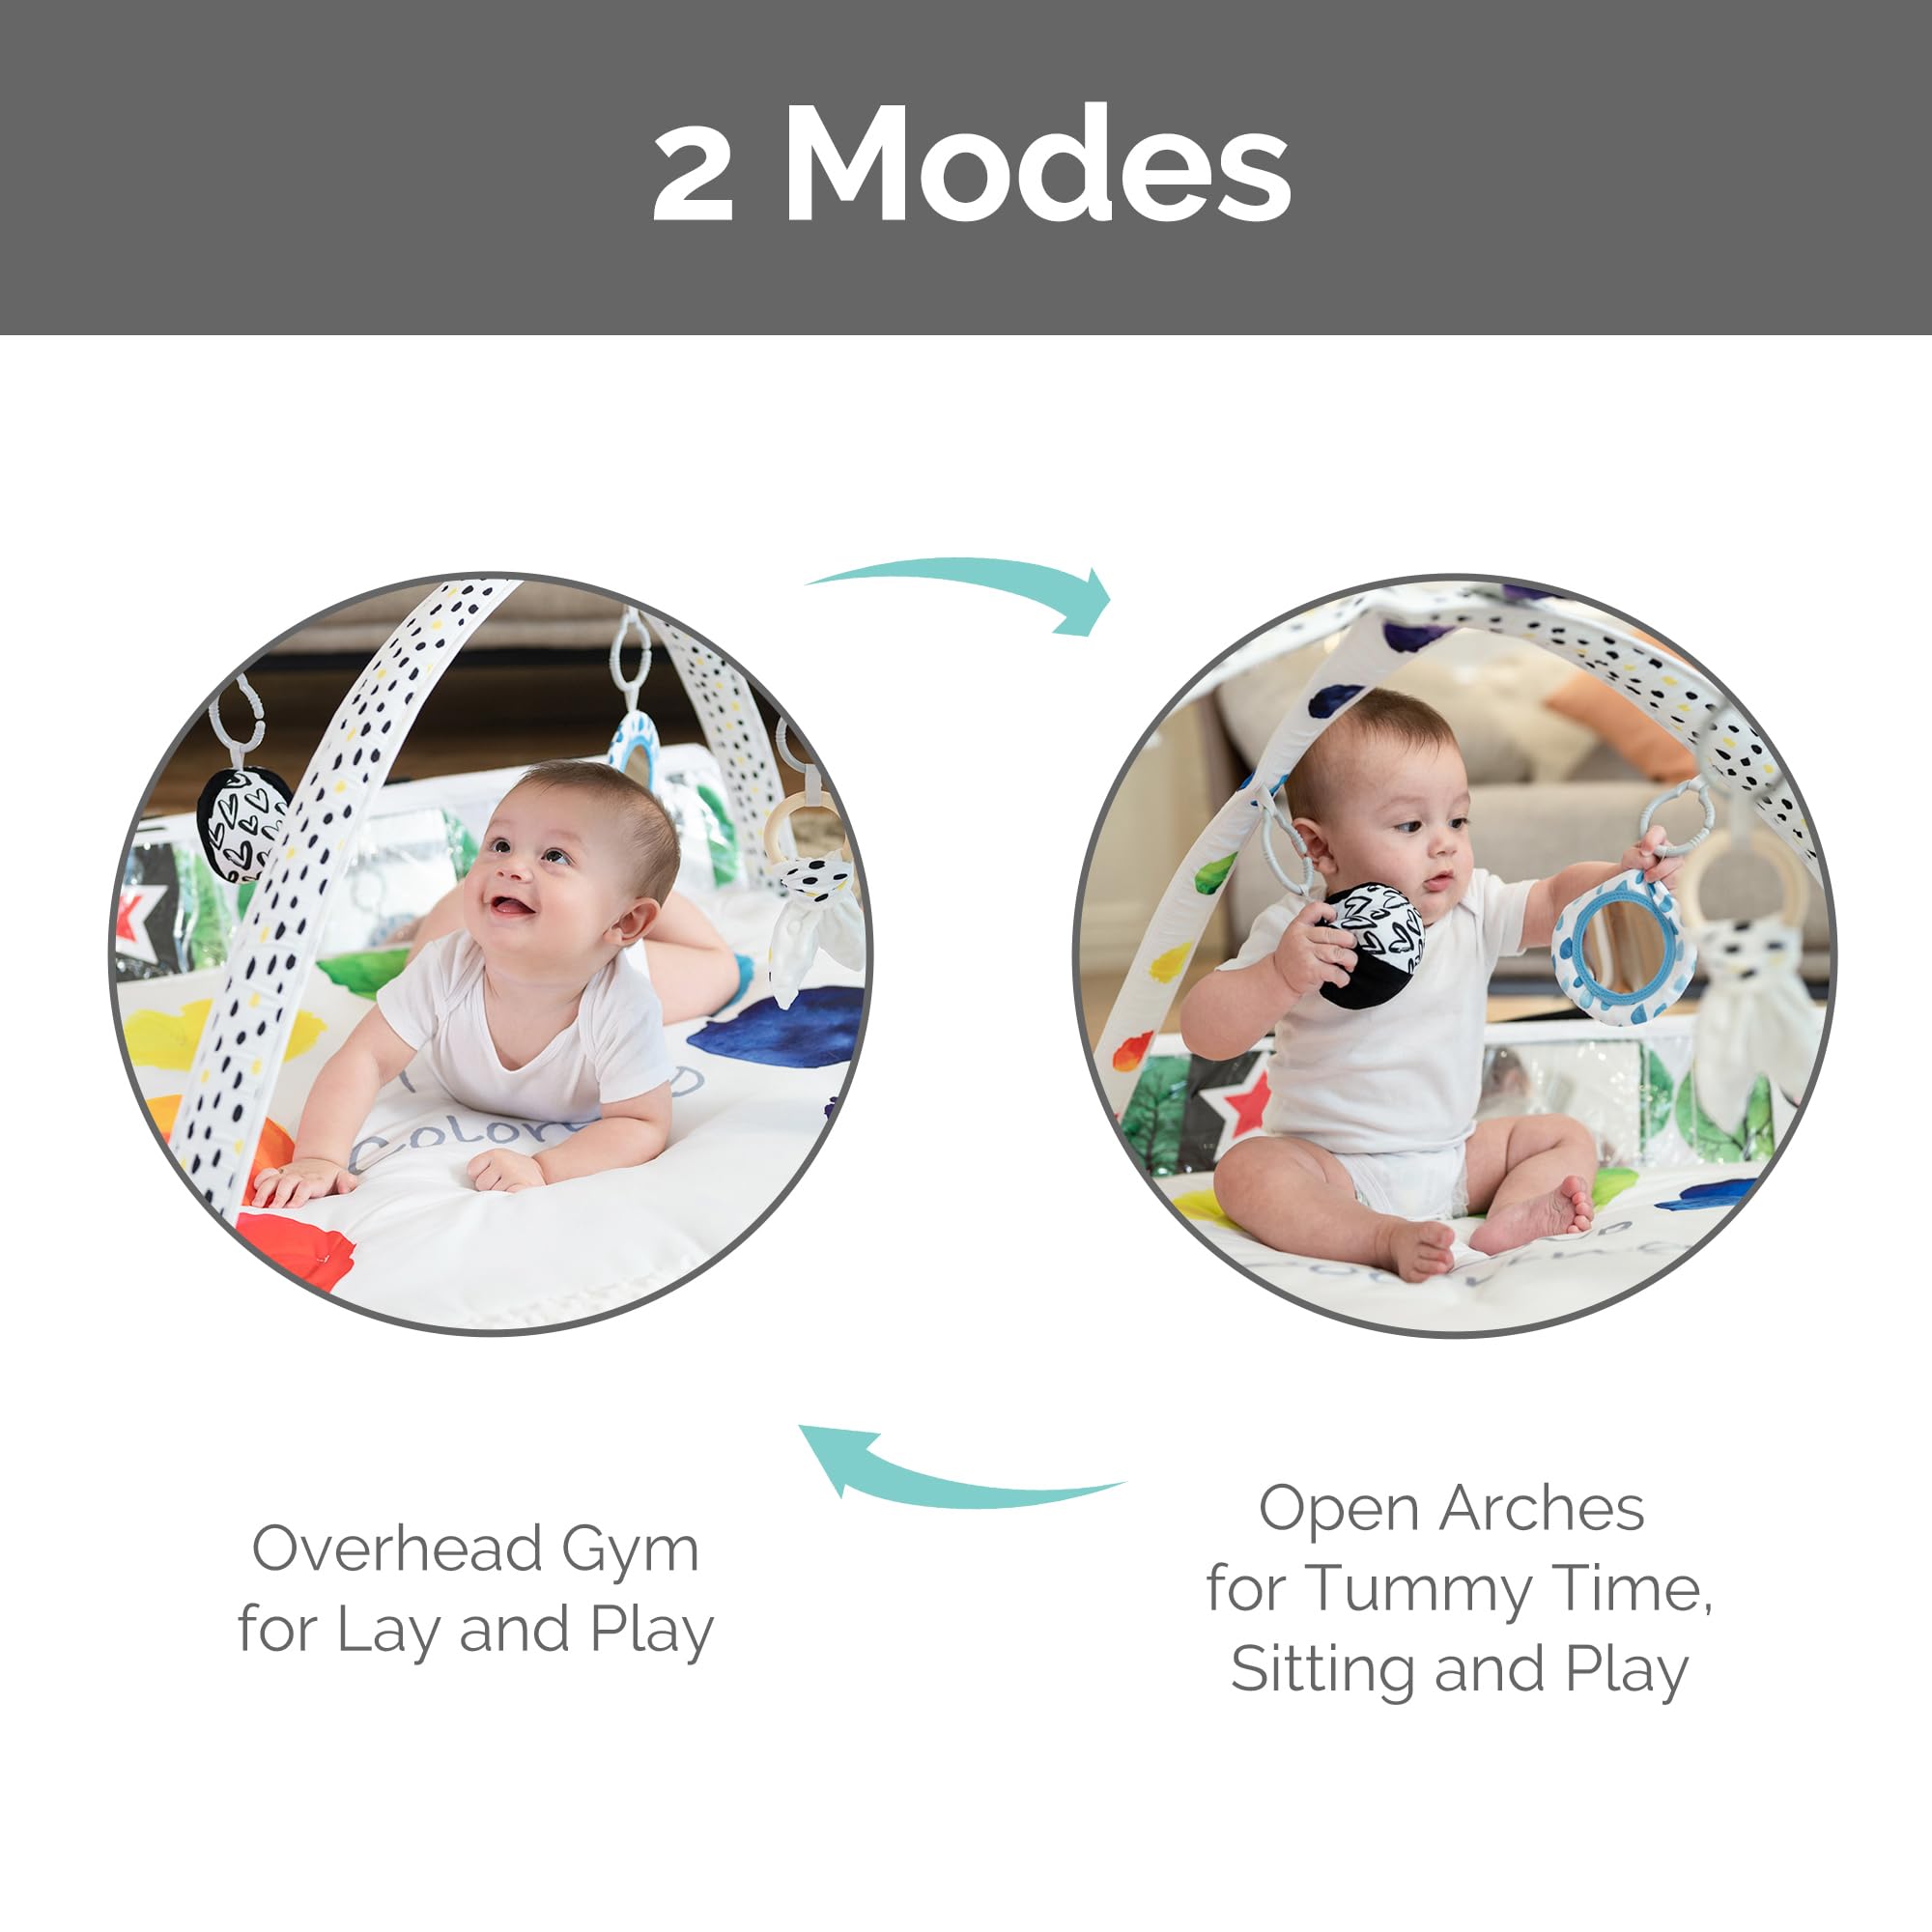 LADIDA Stage-Based Baby Play Gym - 4 Zone Sensory & Motor Skills Development Activity Gym - Large 45